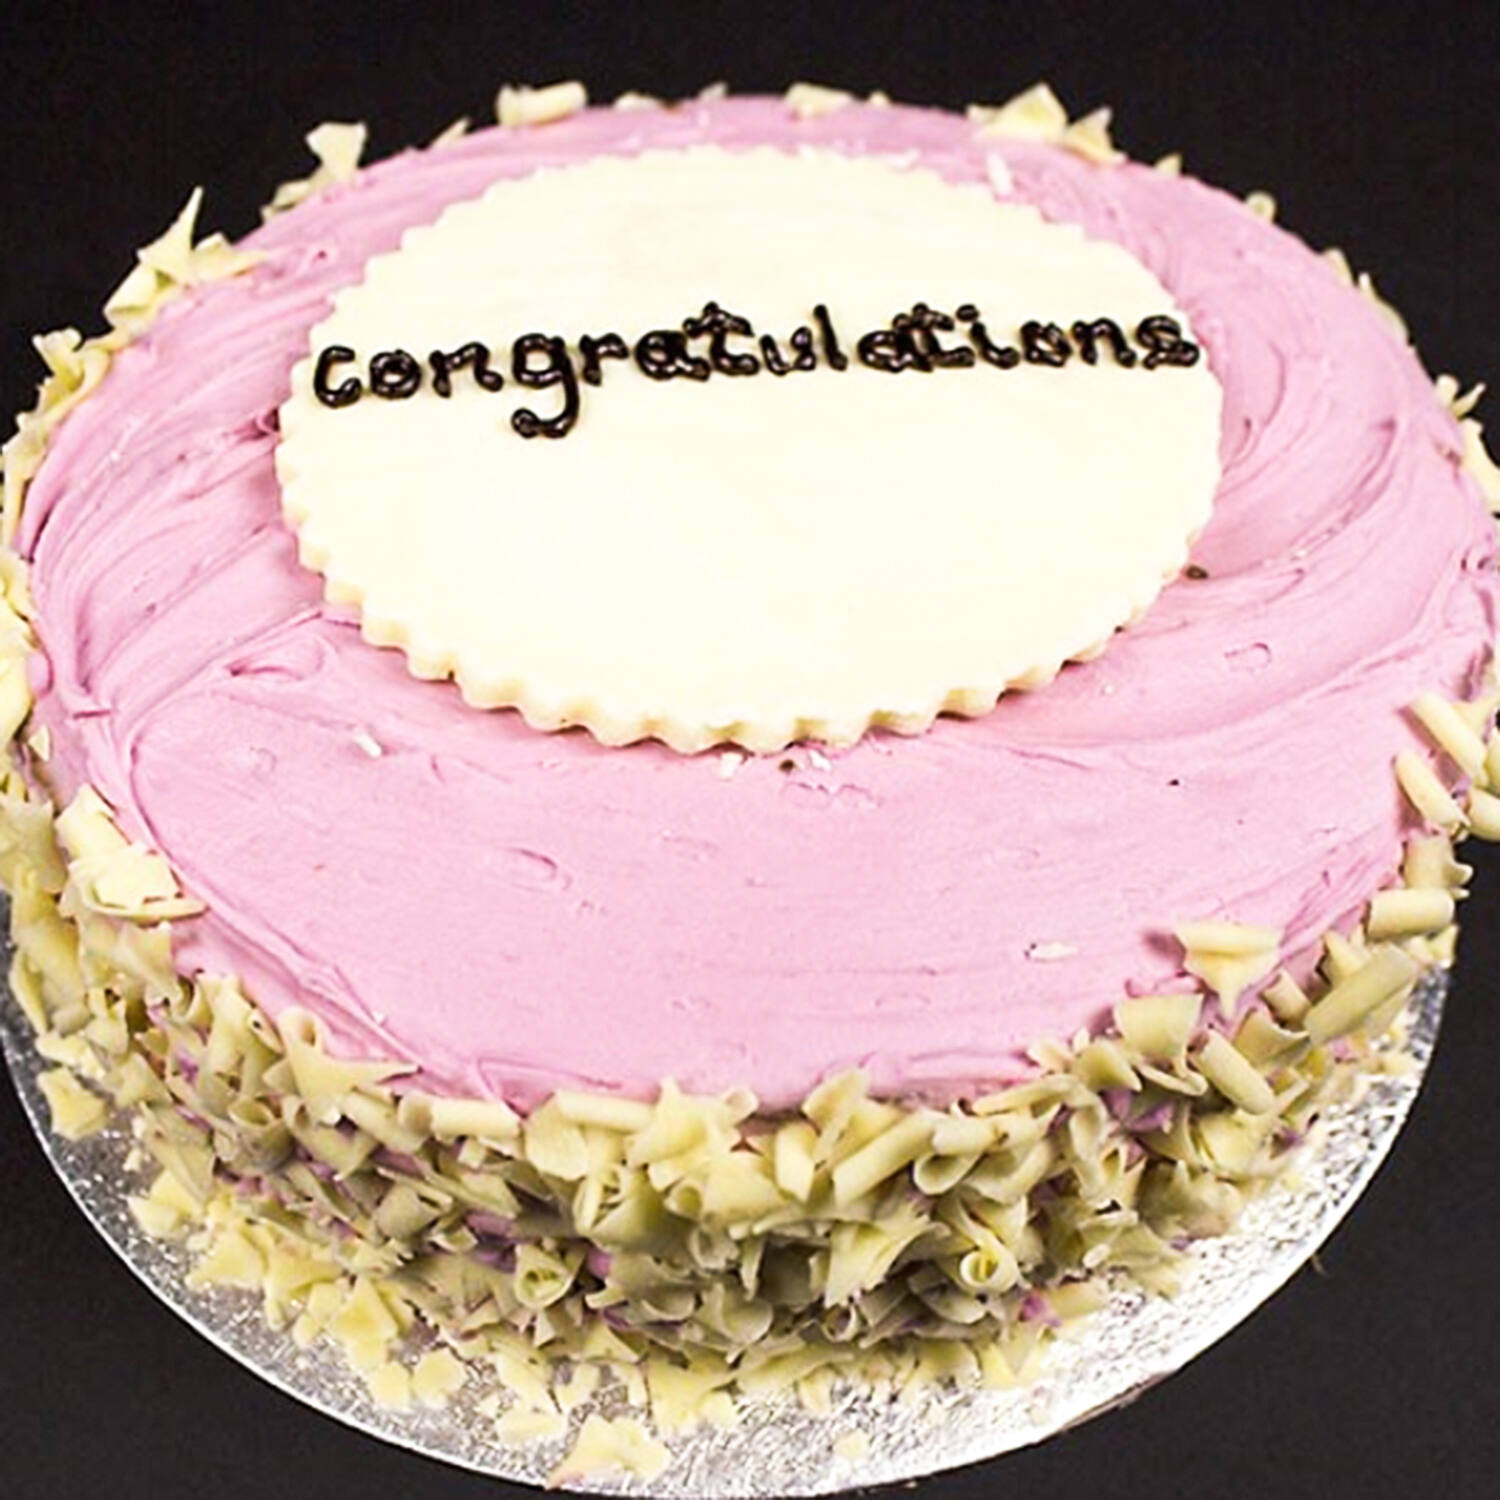 Congratulations Cake Topper Graphic by swiftyslice · Creative Fabrica